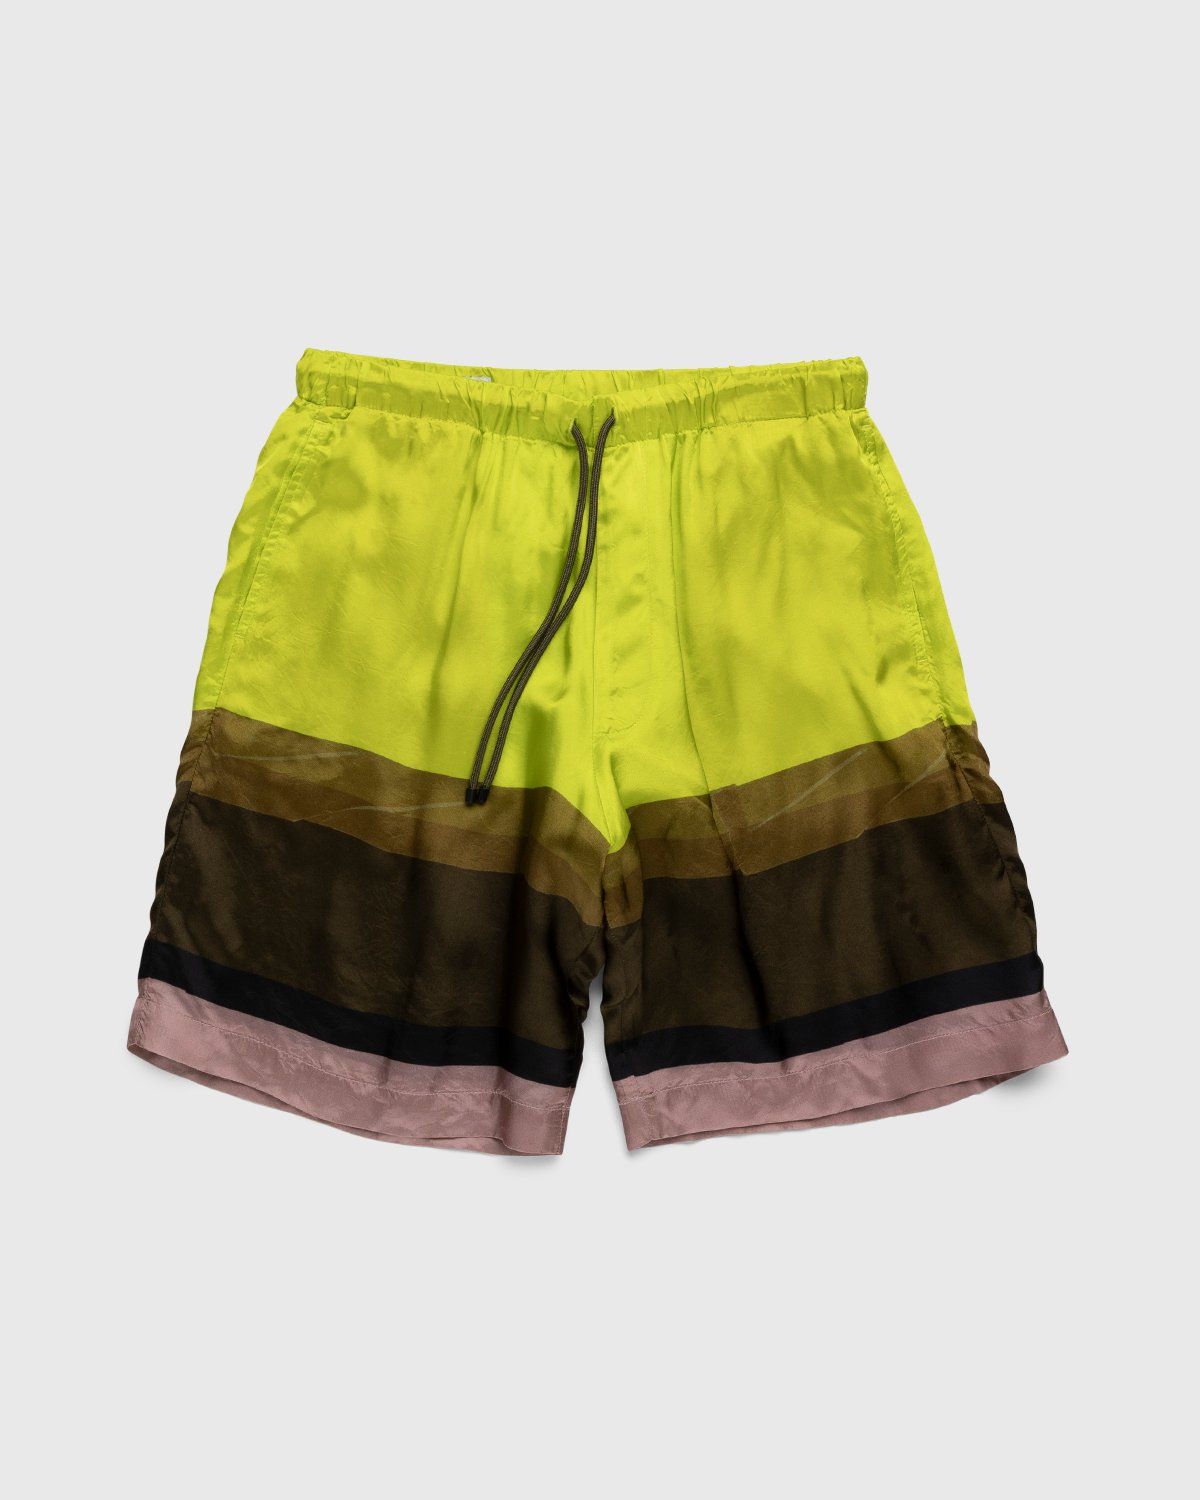 Dries van Noten – Piperi Shorts Yellow - Shorts - Yellow - Image 1